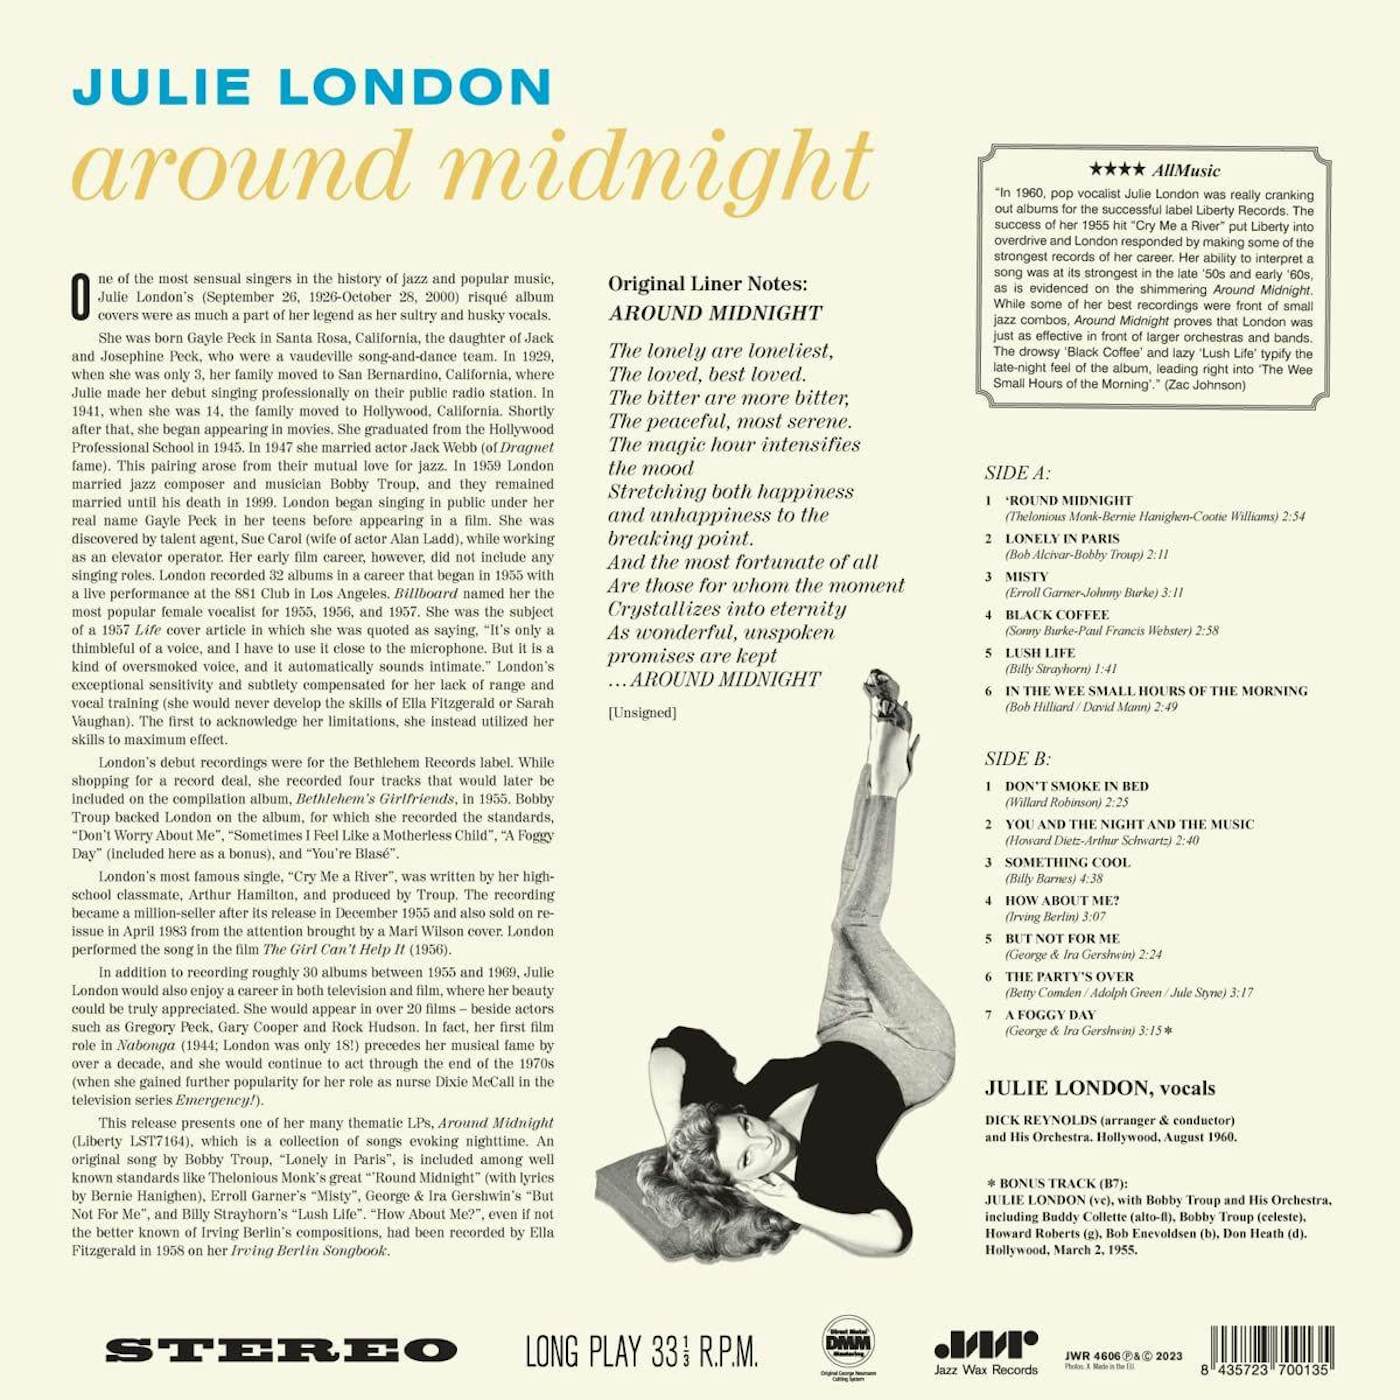 Julie London Around Midnight (Bonus Track/Limited Edition/180g/Spain Release) Vinyl Record